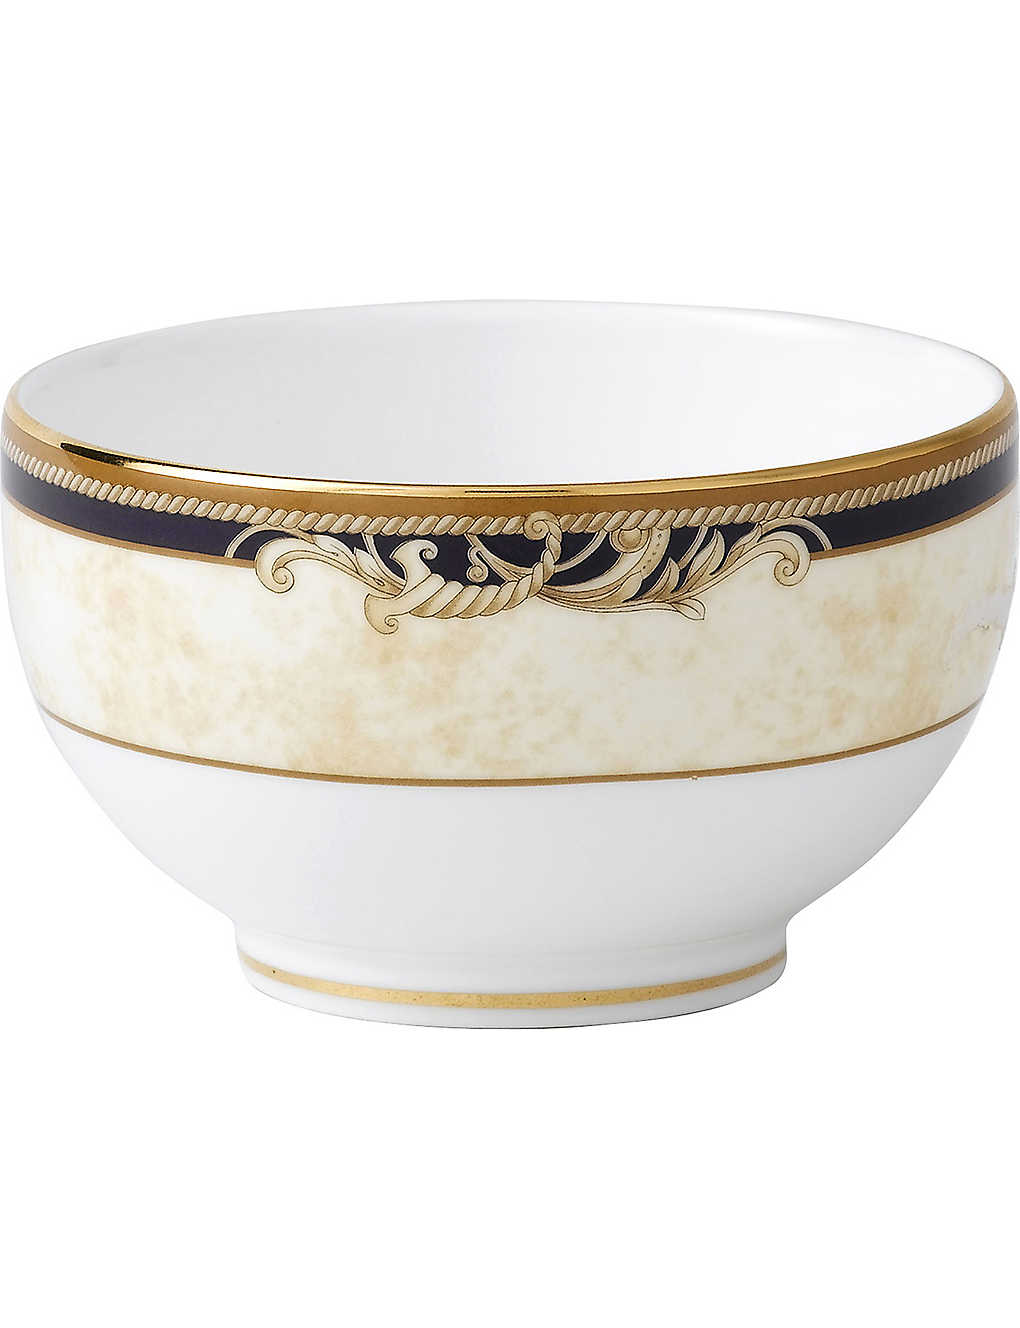 WEDGWOOD - Cornucopia china sugar bowl | Selfridges.com